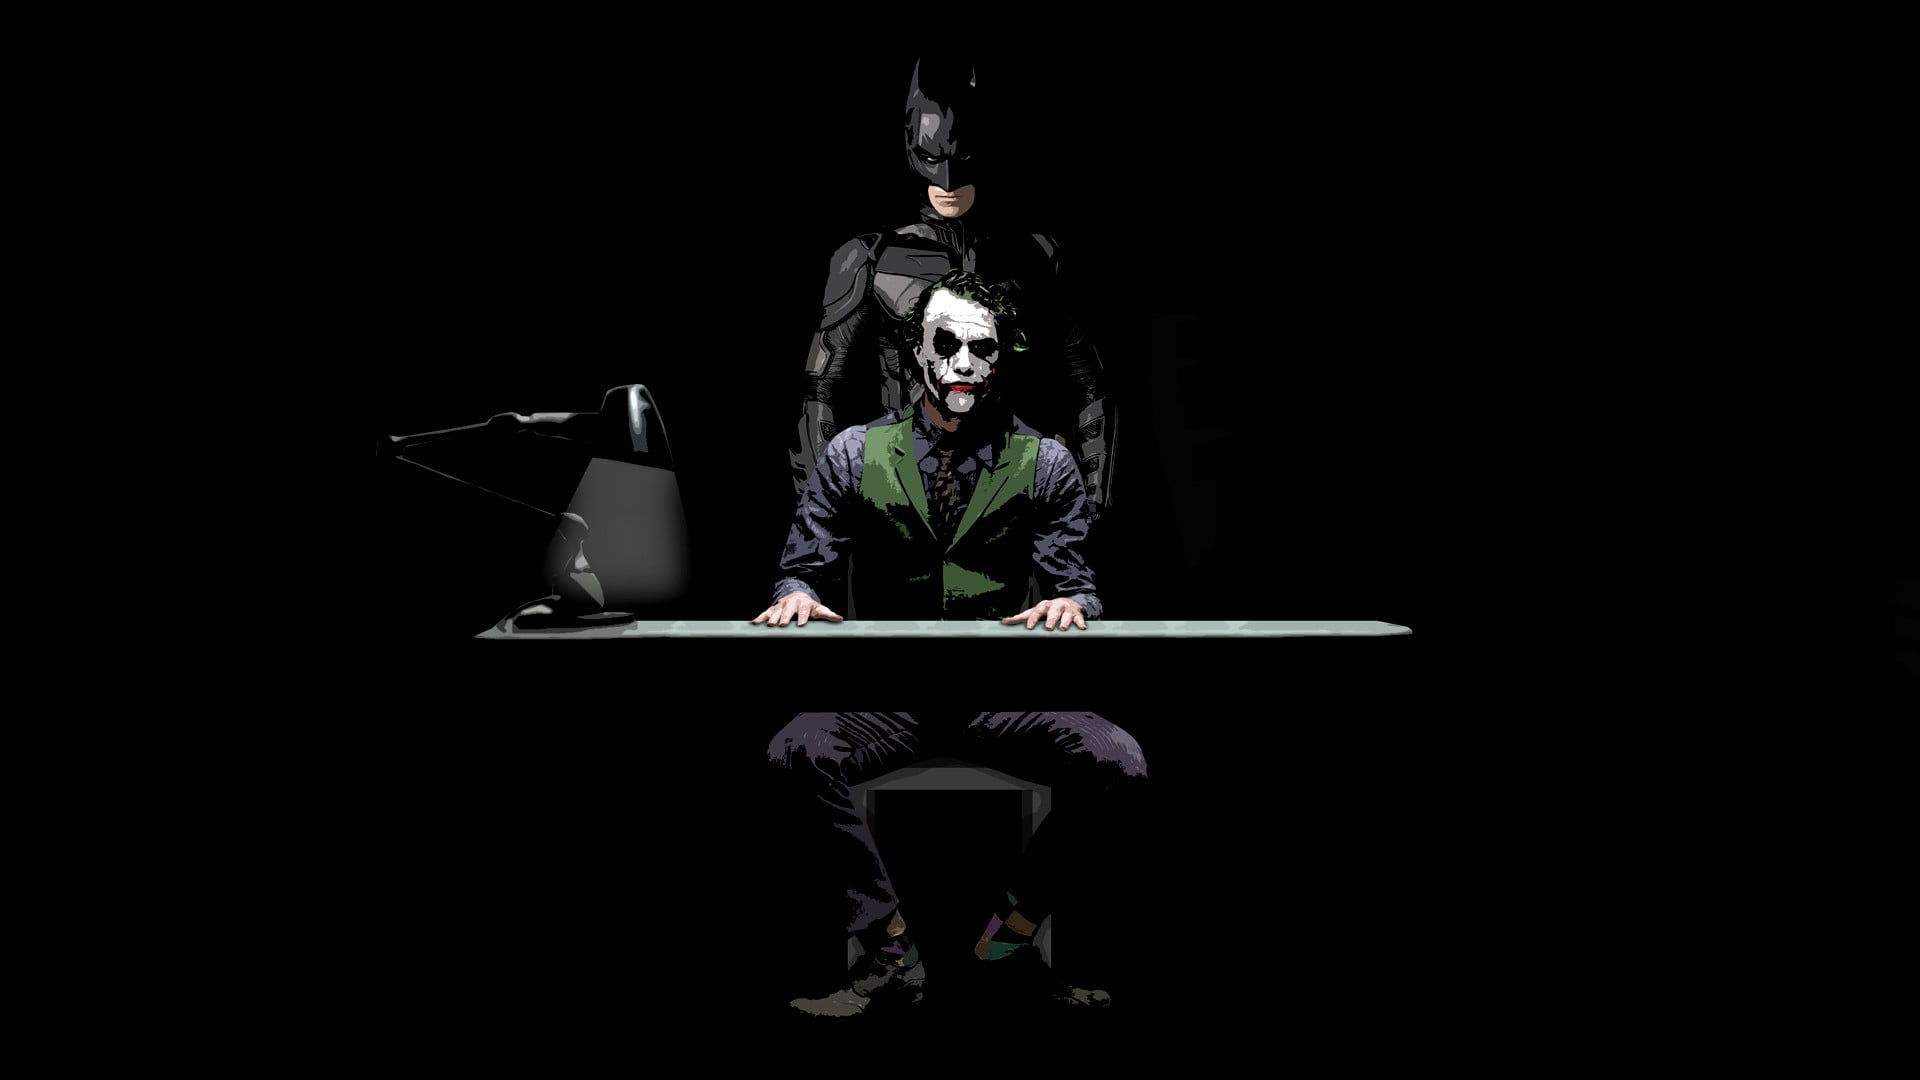 3840x2160 resolution | The Joker and The Batman, movies, Batman, The ...